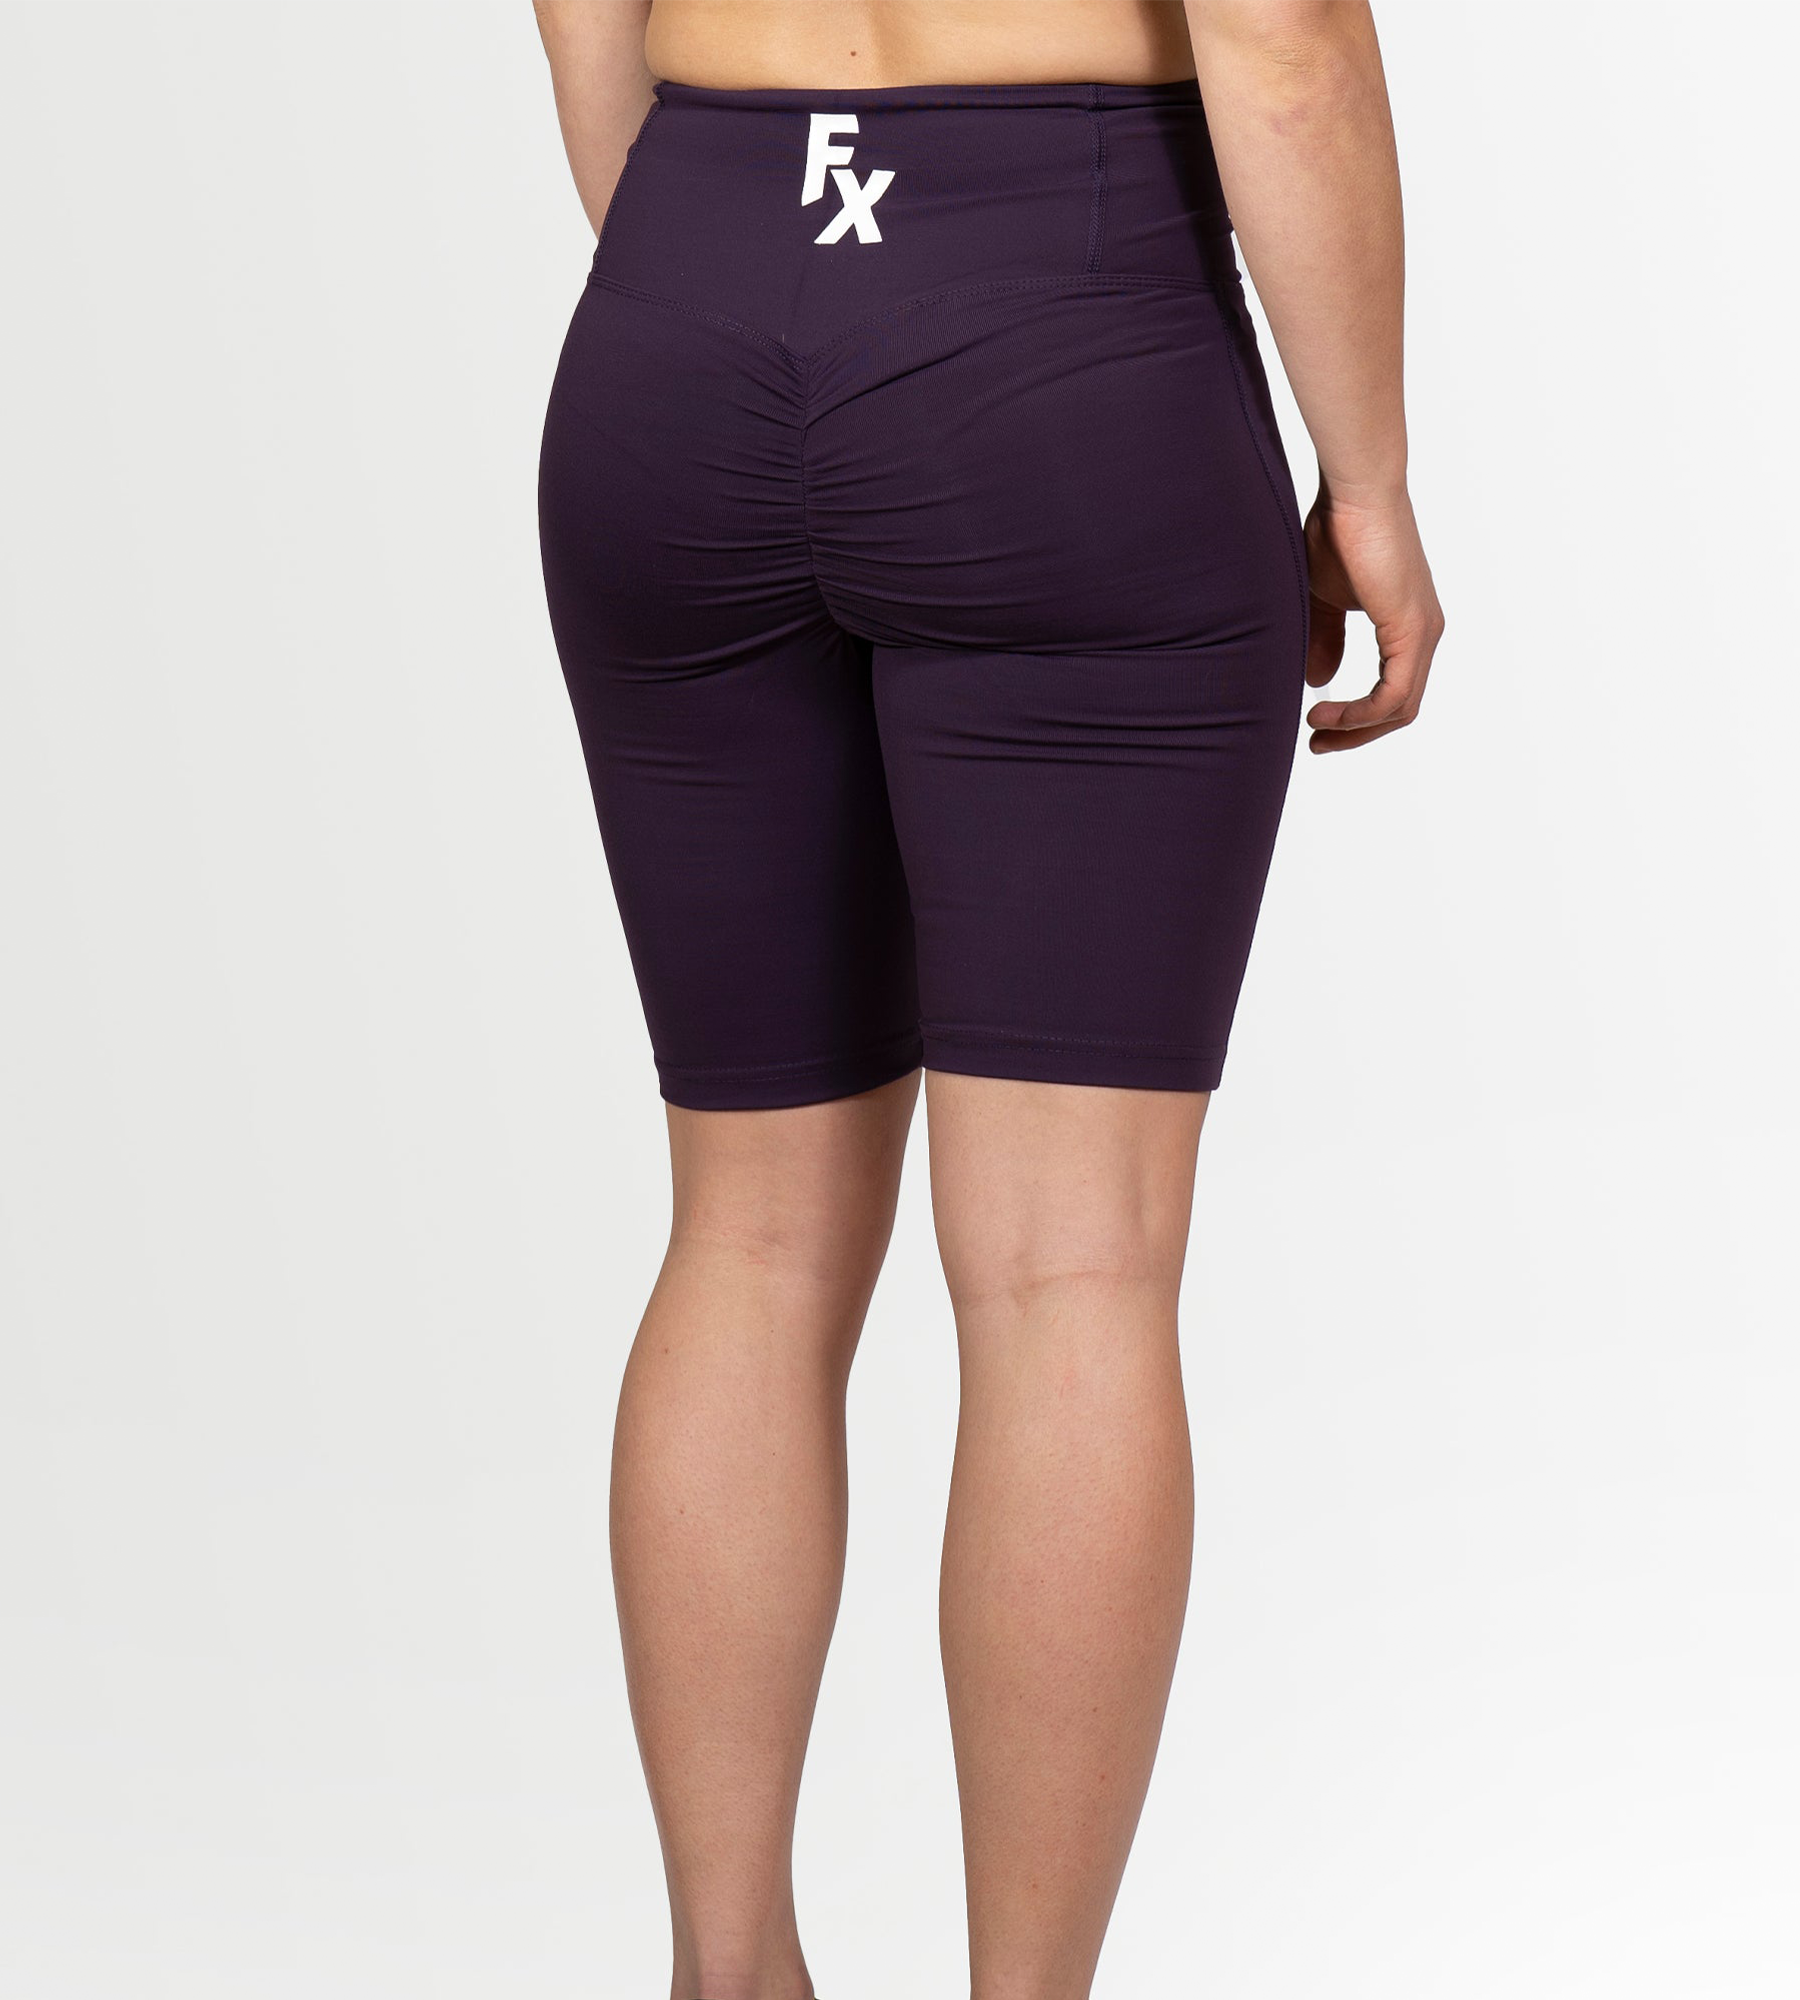 FitnessFox Grape Scrunch Bum Shorts